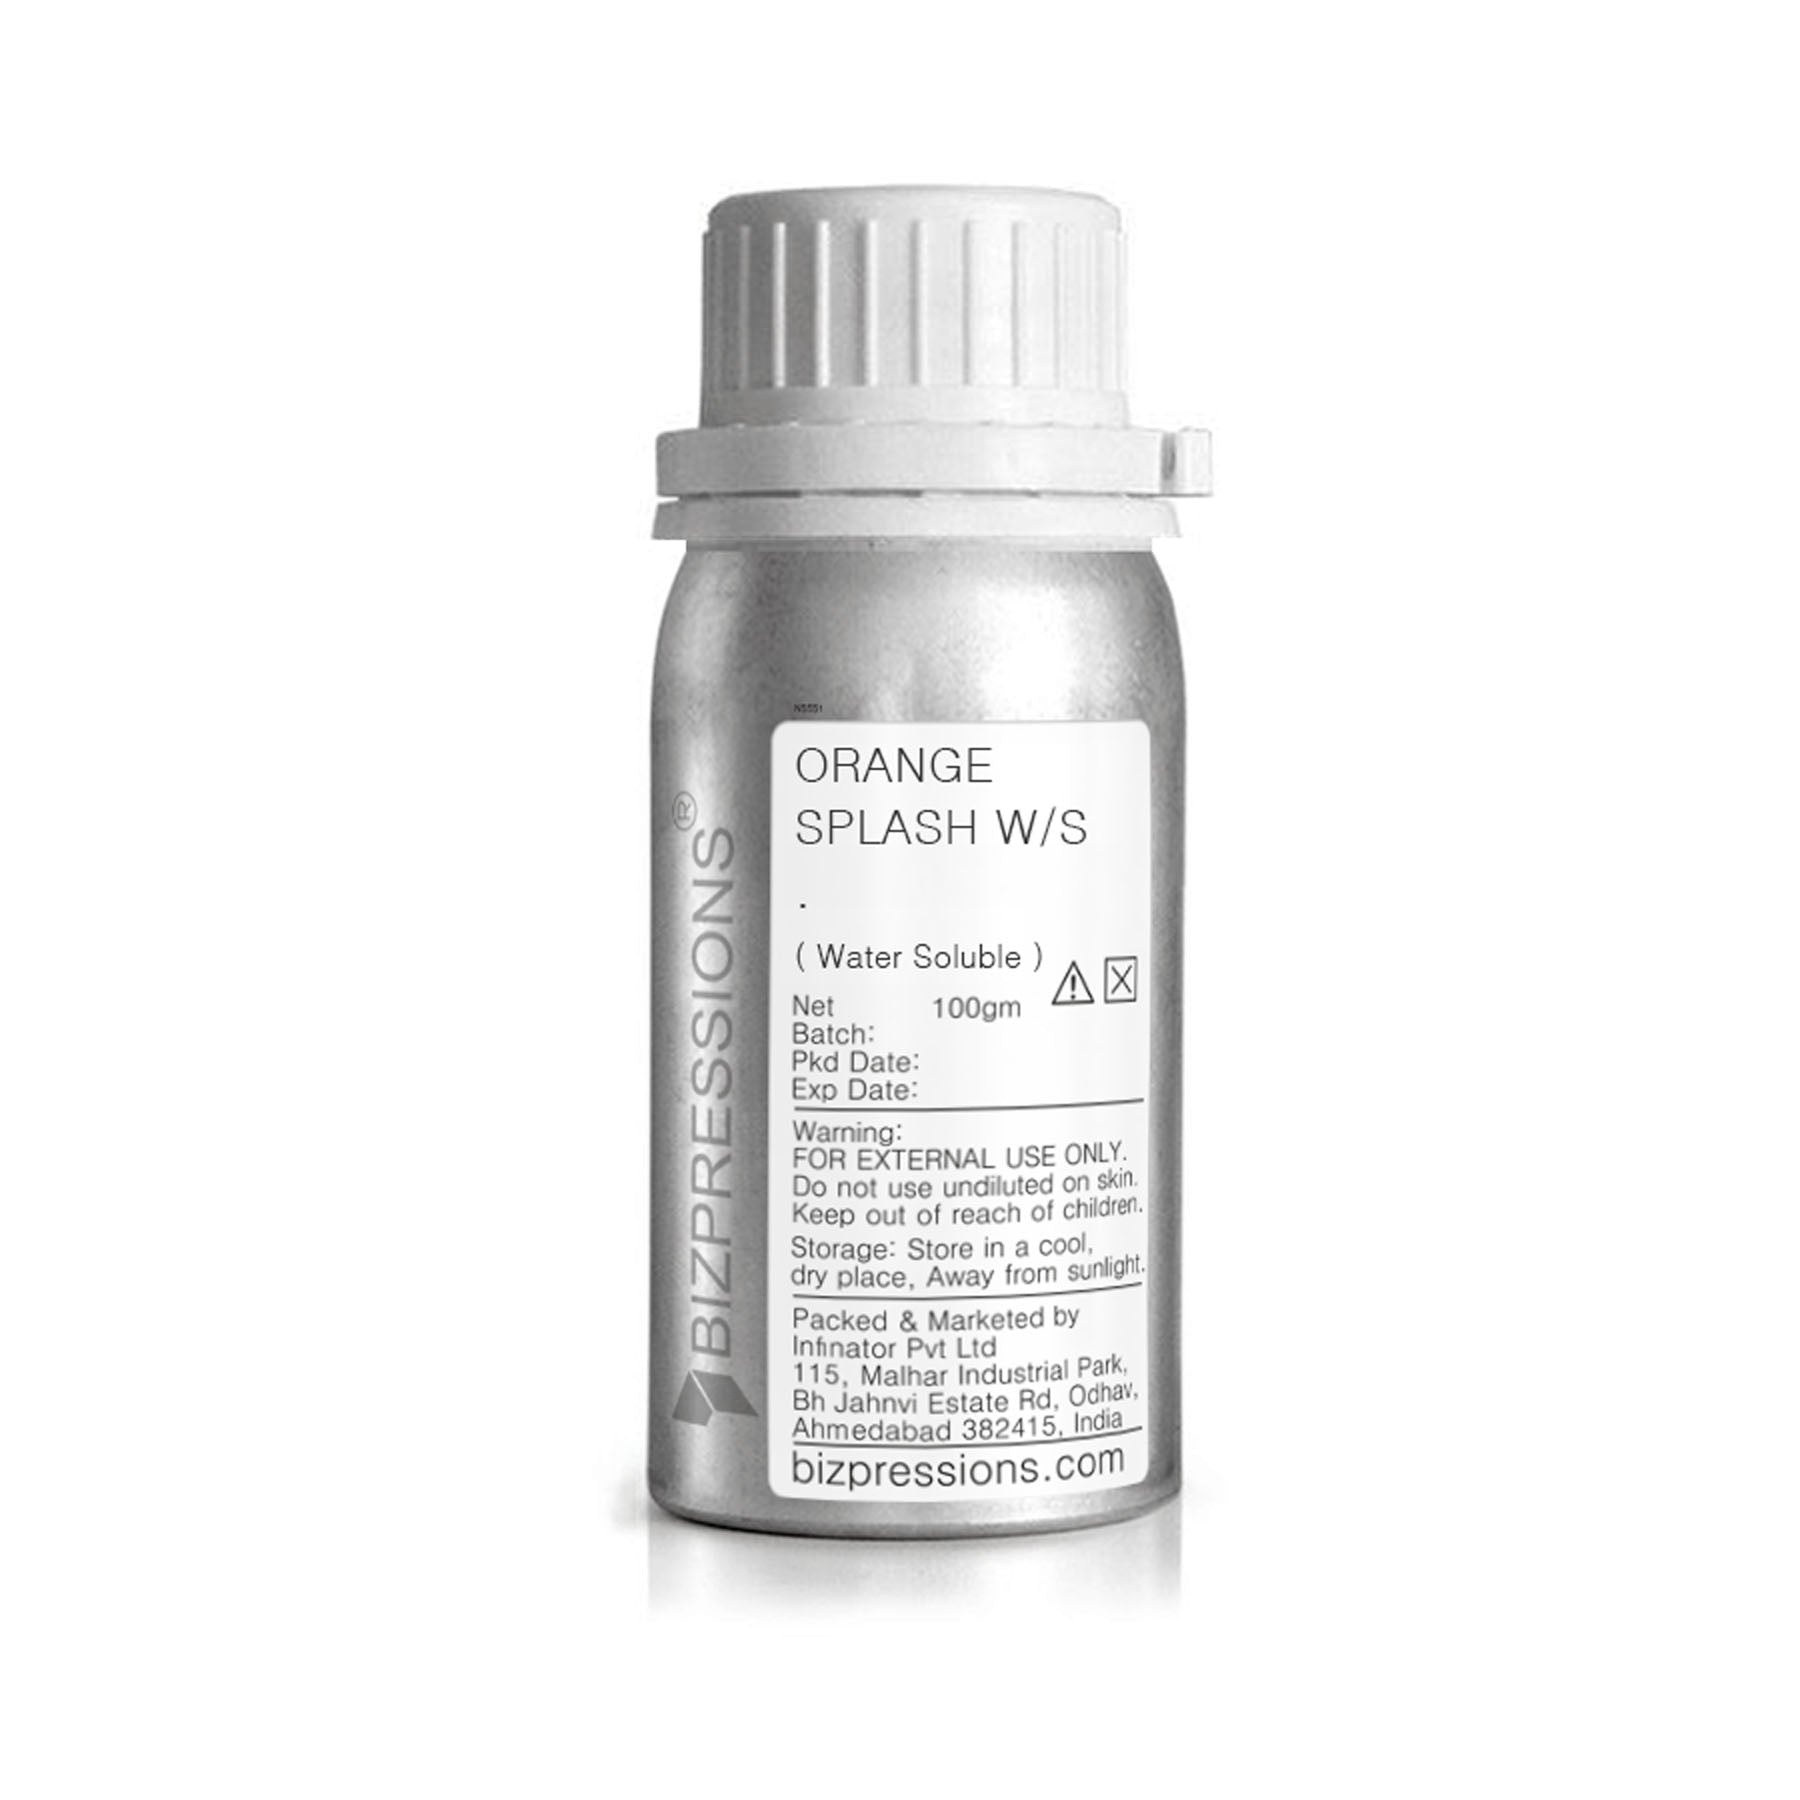 ORANGE SPLASH W/S - Fragrance ( Water Soluble ) - 100 gm